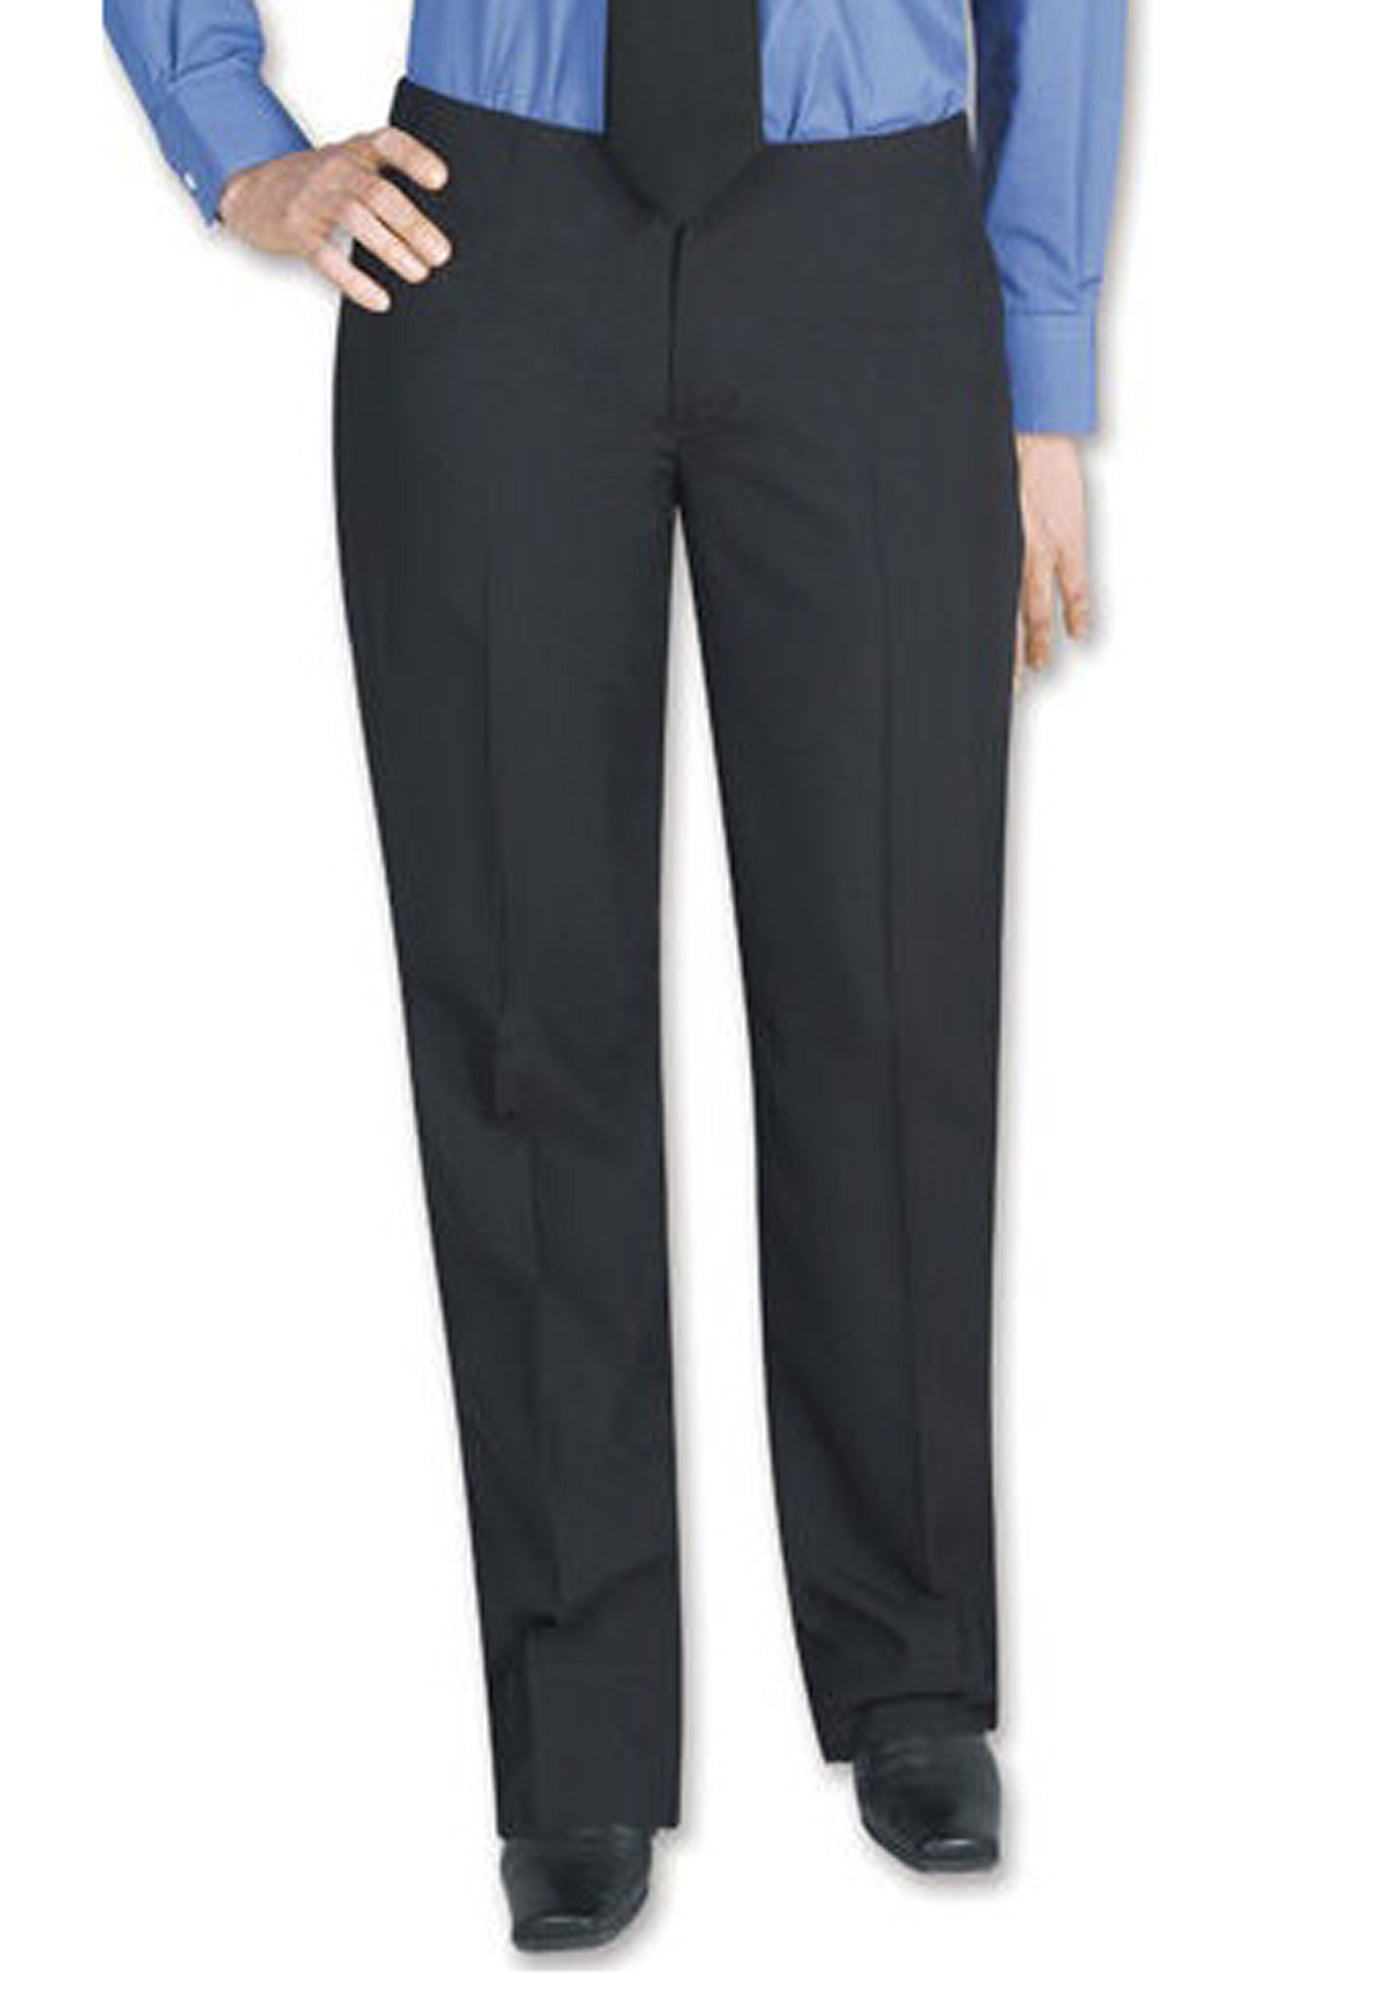 Black Slim Fit Tuxedo Pants with Satin Back Pocket for Women – LITTLE BLACK  TUX